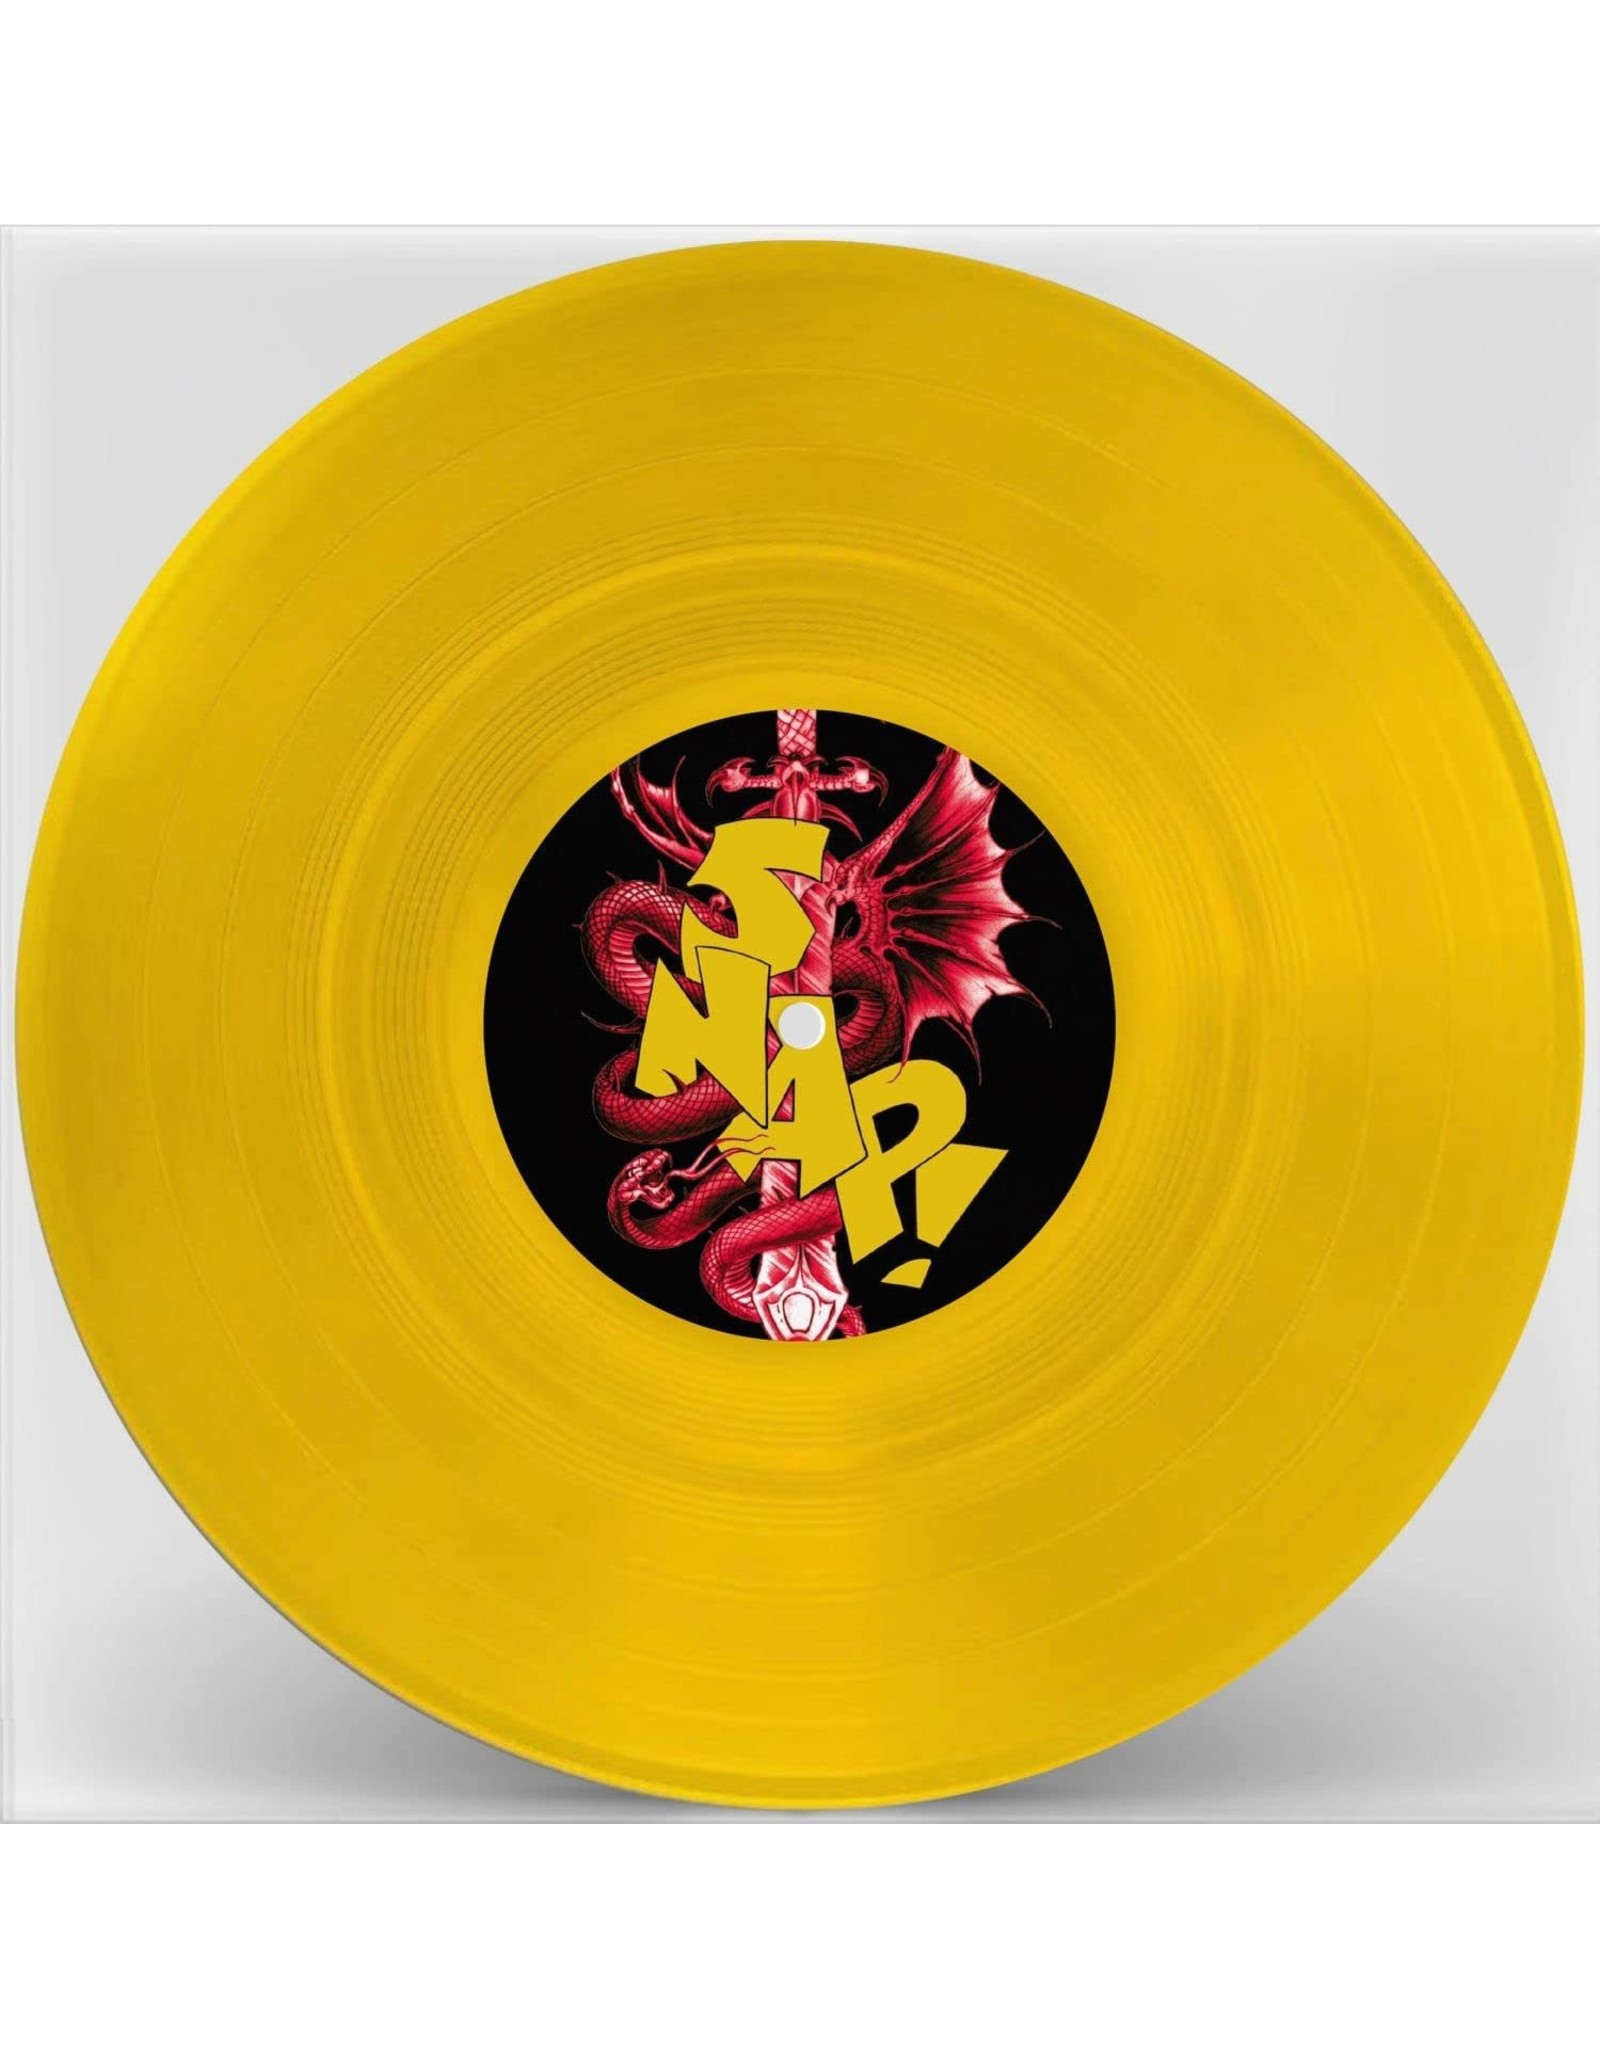 SNAP! - Rhythm Is A Dancer EP (30th Anniversary) [Yellow Vinyl]